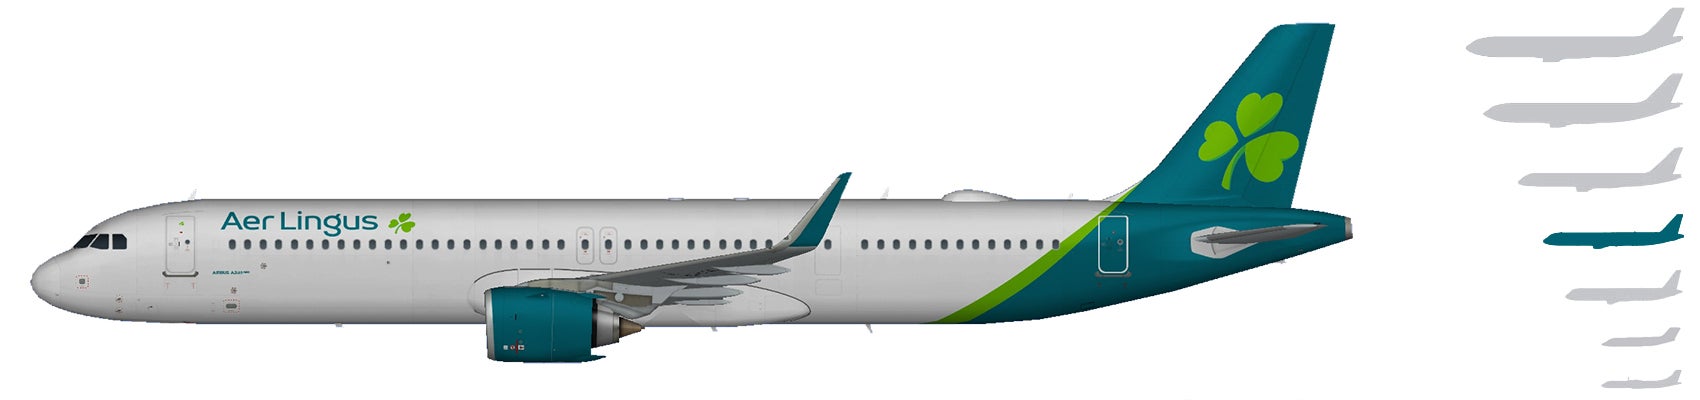 Aer Lingus Airplane Seating Chart